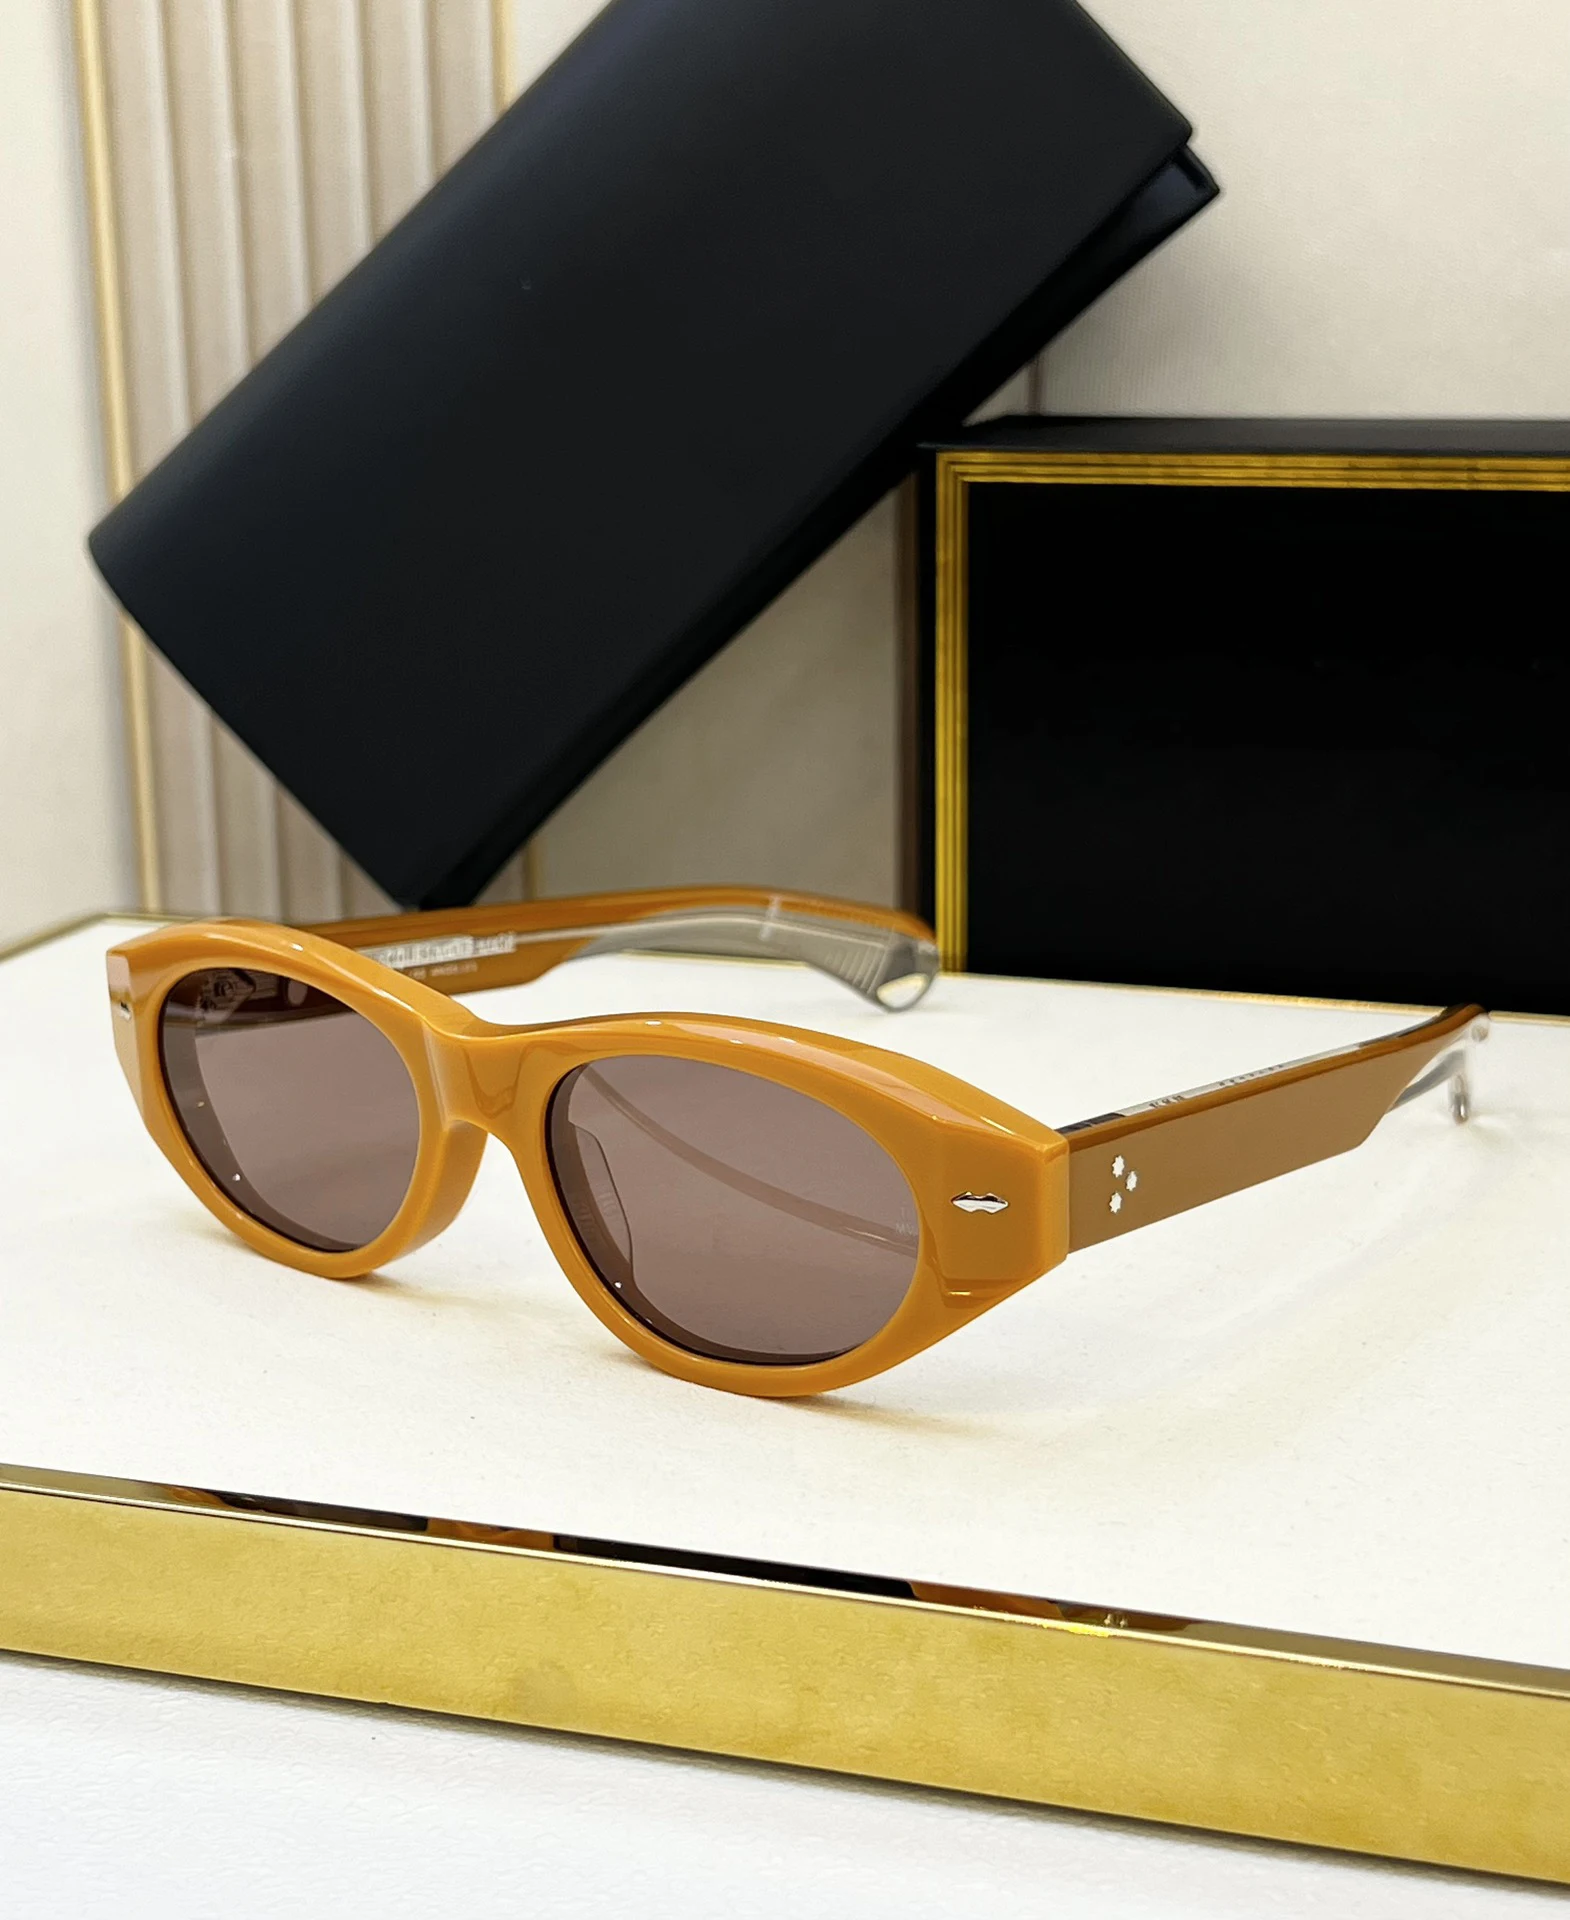 

NEW JMM KRASNER sunglasses men top quality Fashion Handmade Vintage acetate UV400 eyeglasses fashion women trendy SUN GLASSES